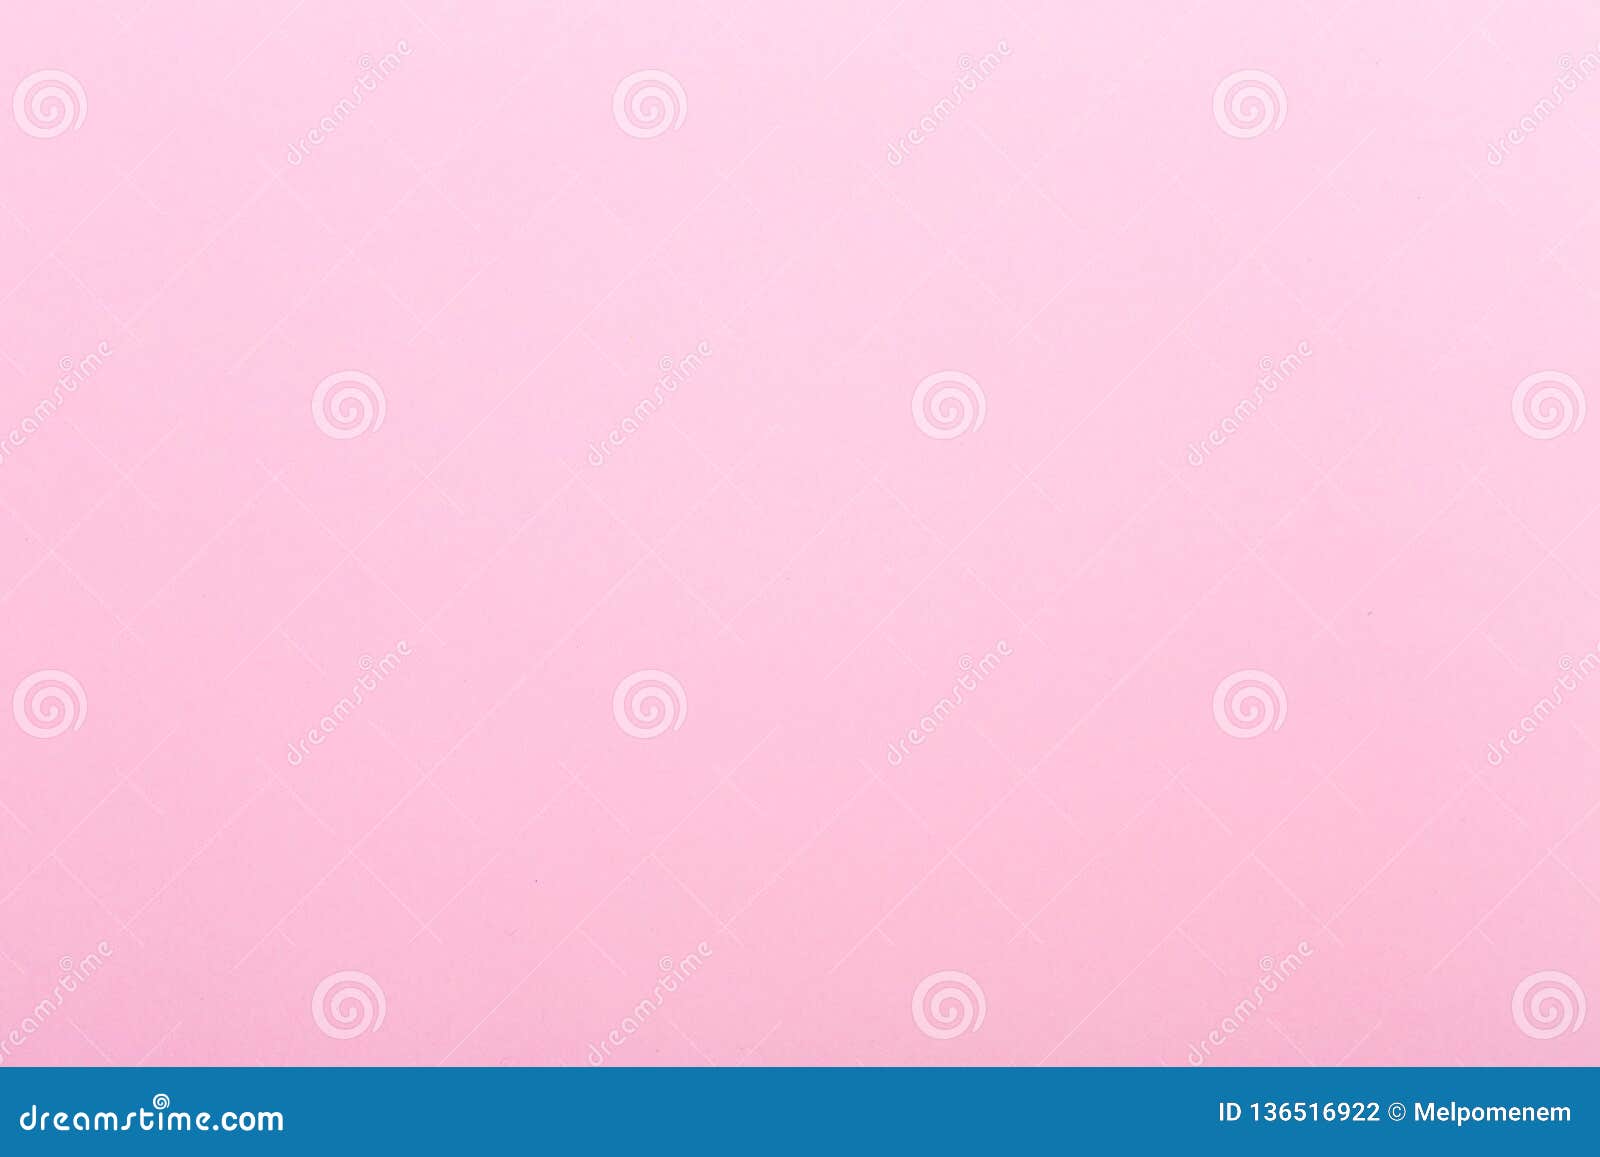 25 Pastel Color Iphone Wallpaper SOLID Color Pastel Color  Etsy